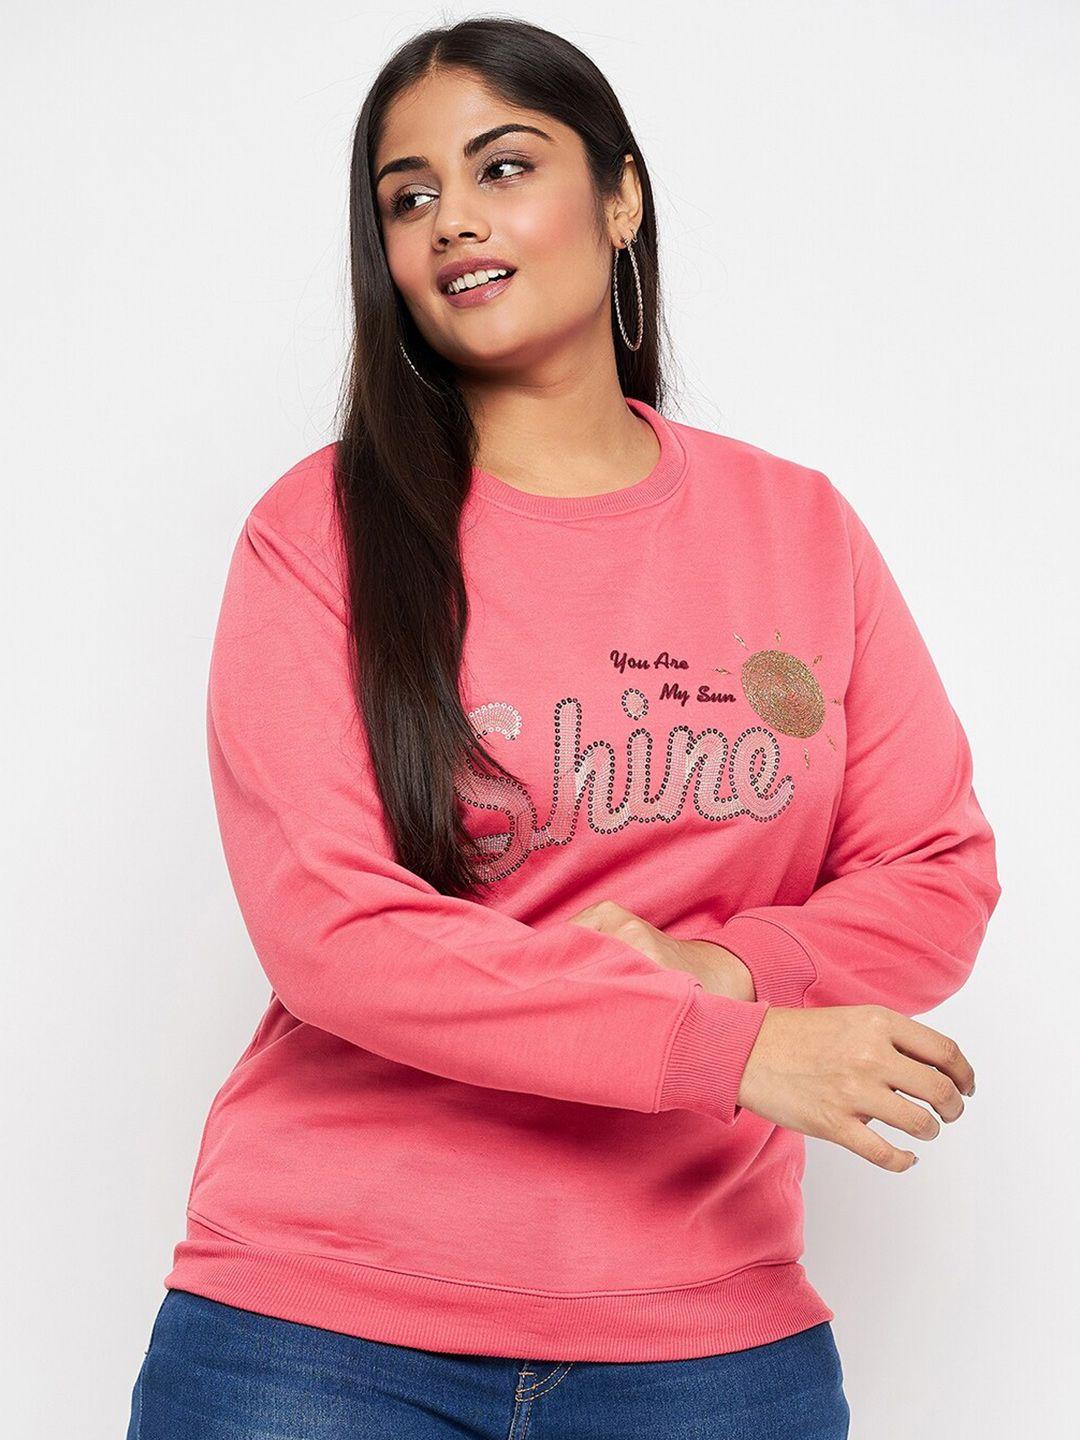 austivo women pink printed sweatshirt